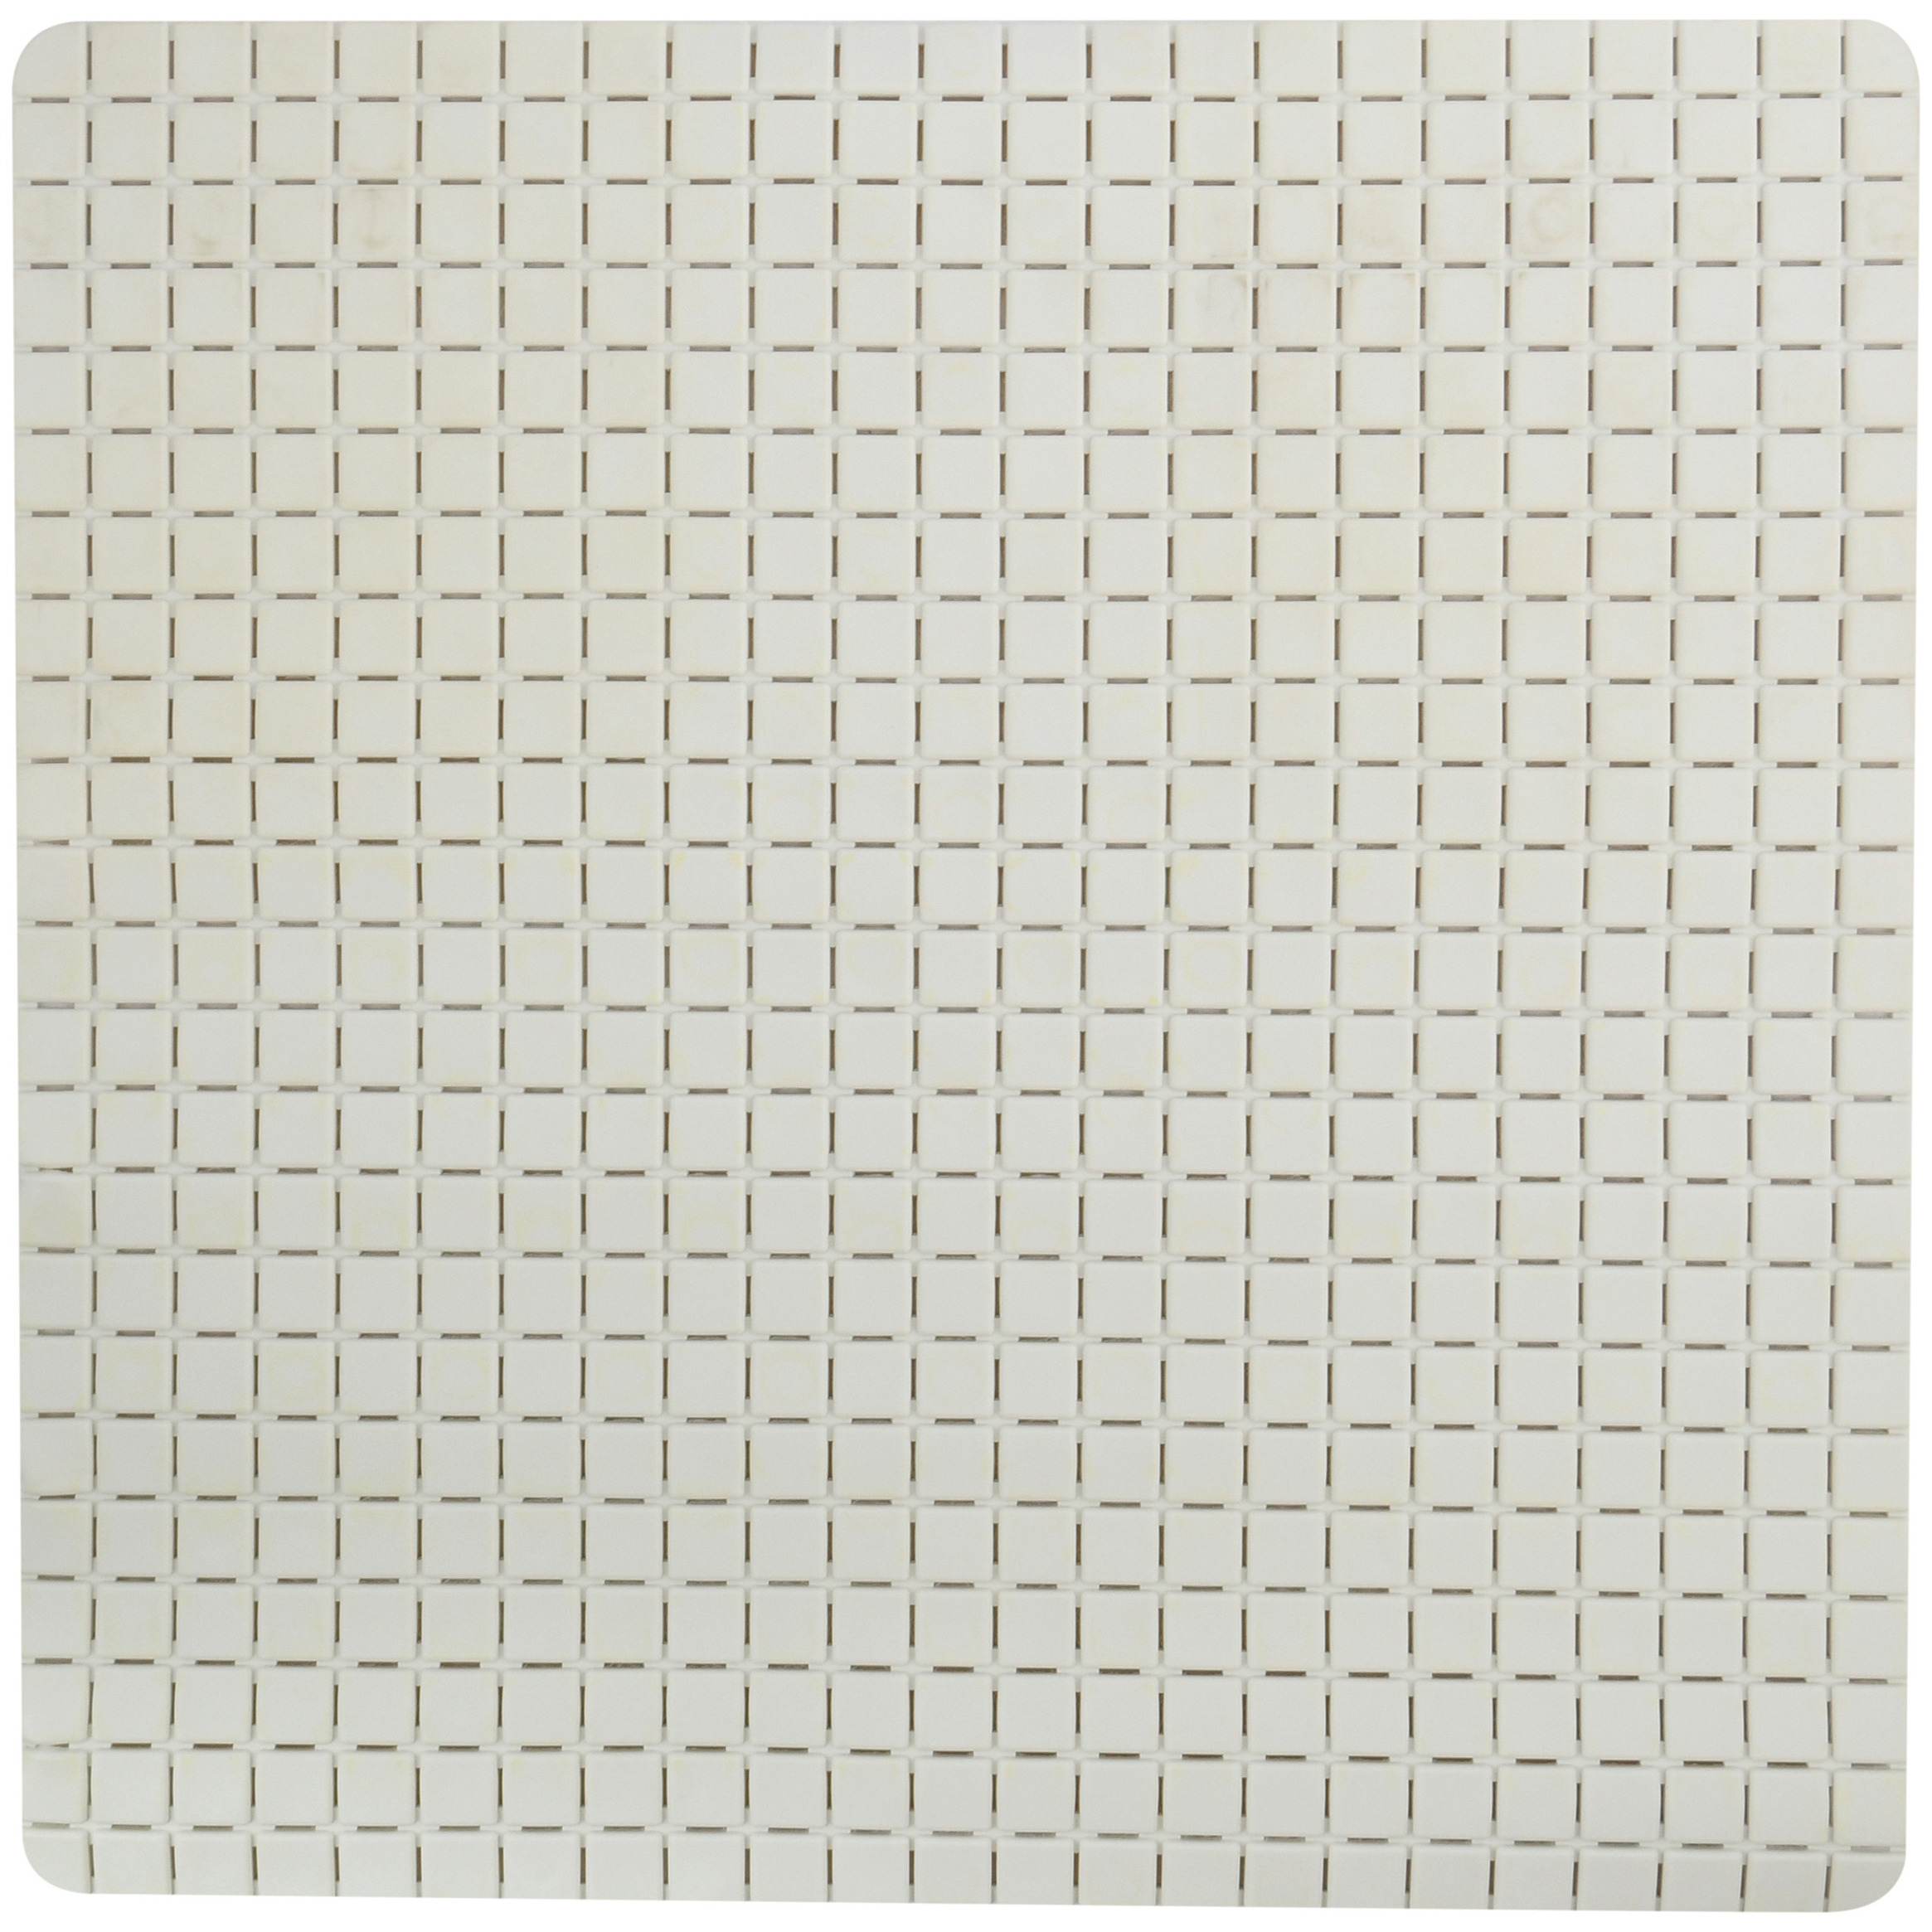 Douche-bad anti-slip mat badkamer rubber ivoor wit 54 x 54 cm vierkant